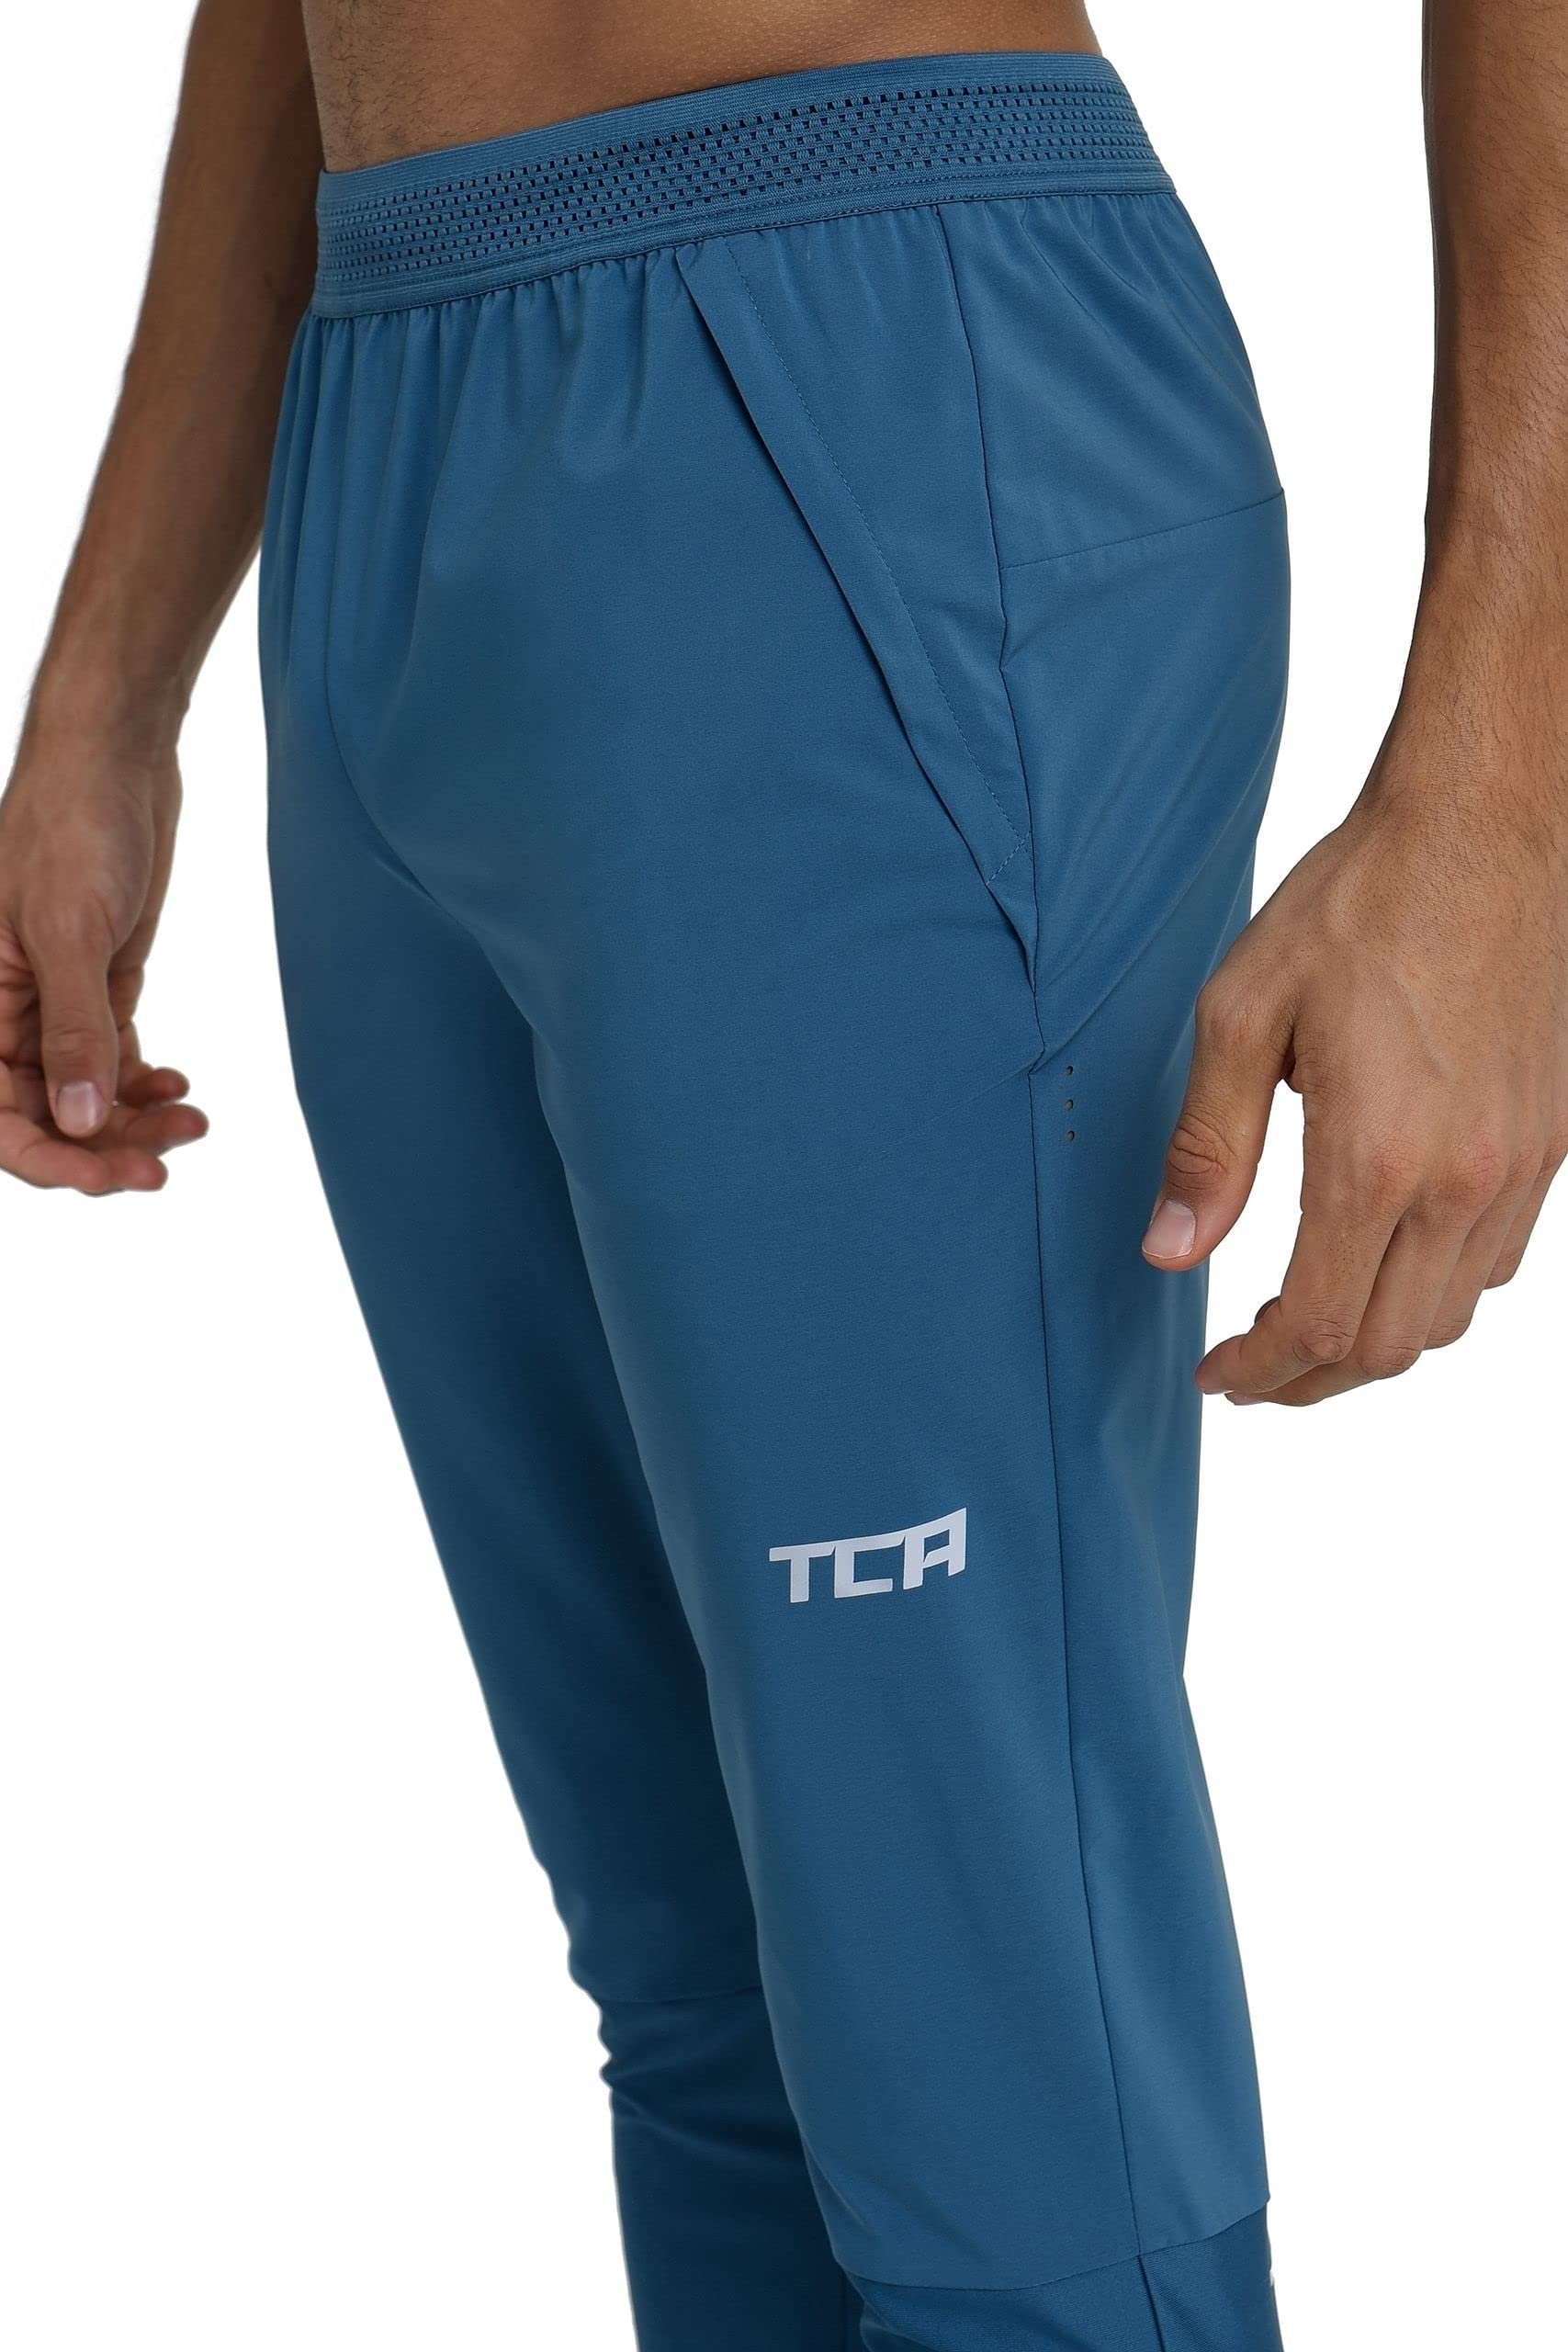 TCA Laufhose TCA Herren Blau Jogginghose - Reißverschlusstaschen mit